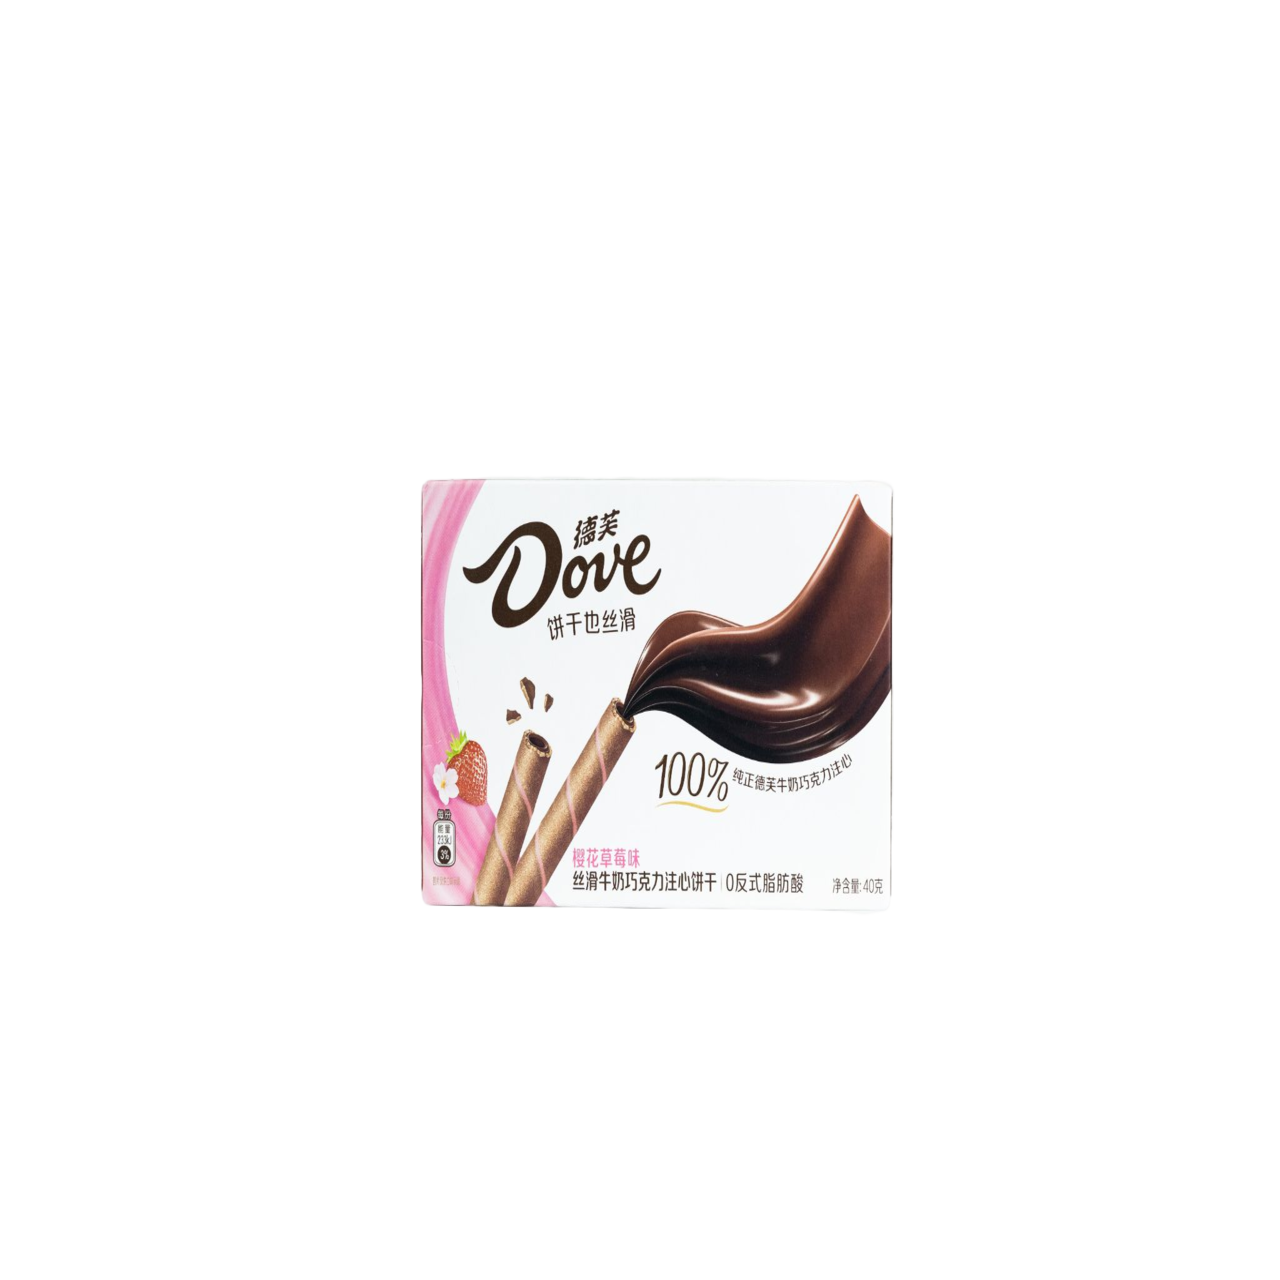 Dove - Cherry blossom strawberry flavor